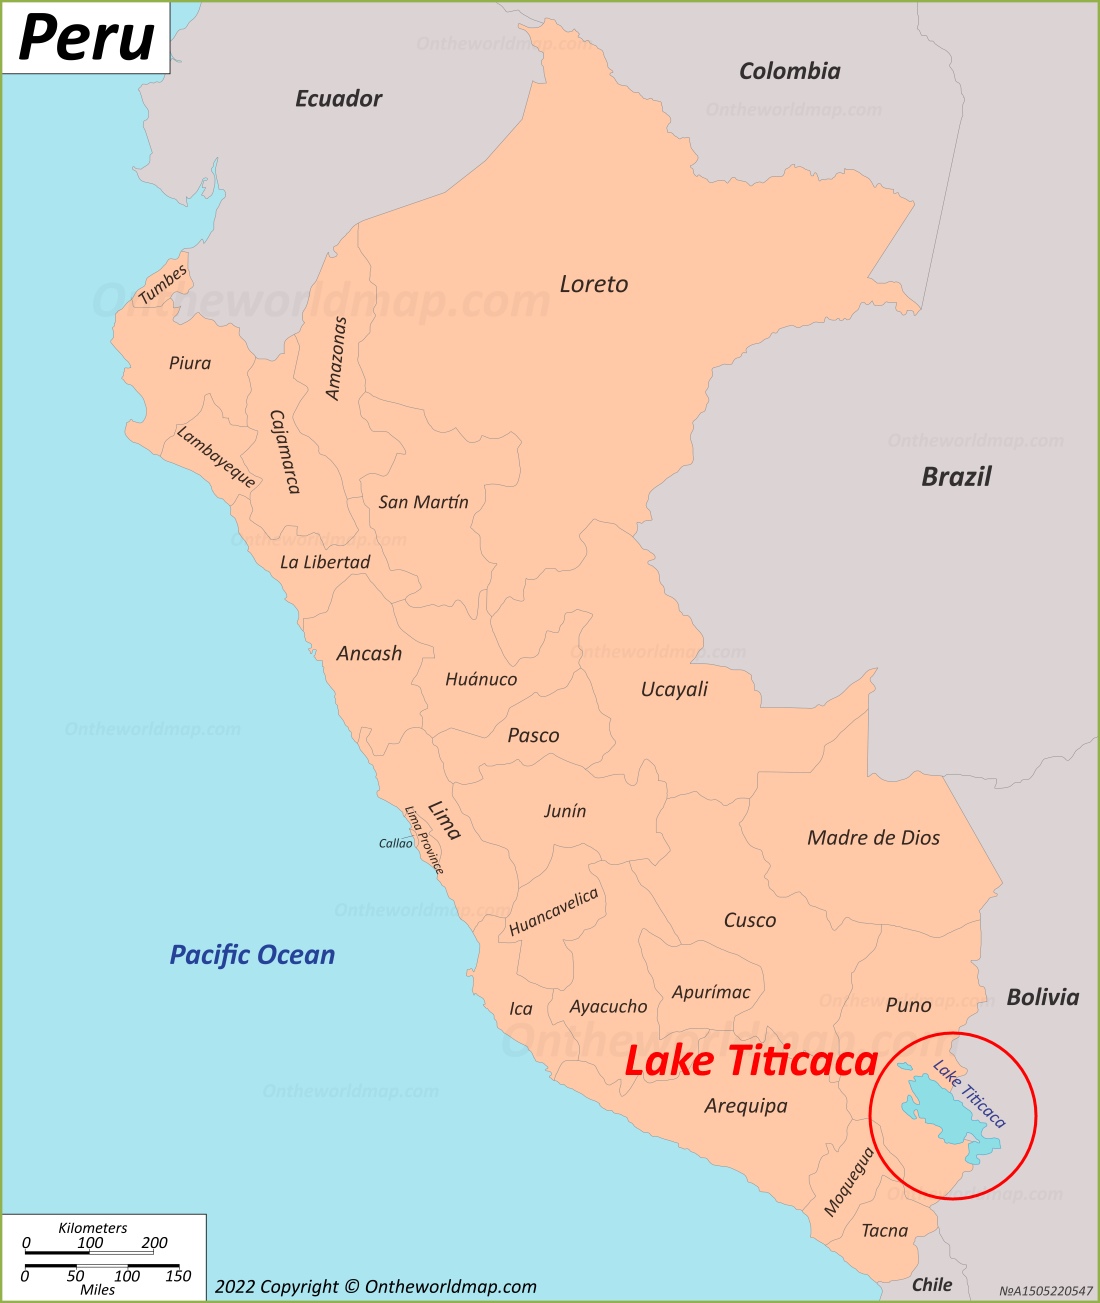 Lake Titicaca Location On The Peru Map